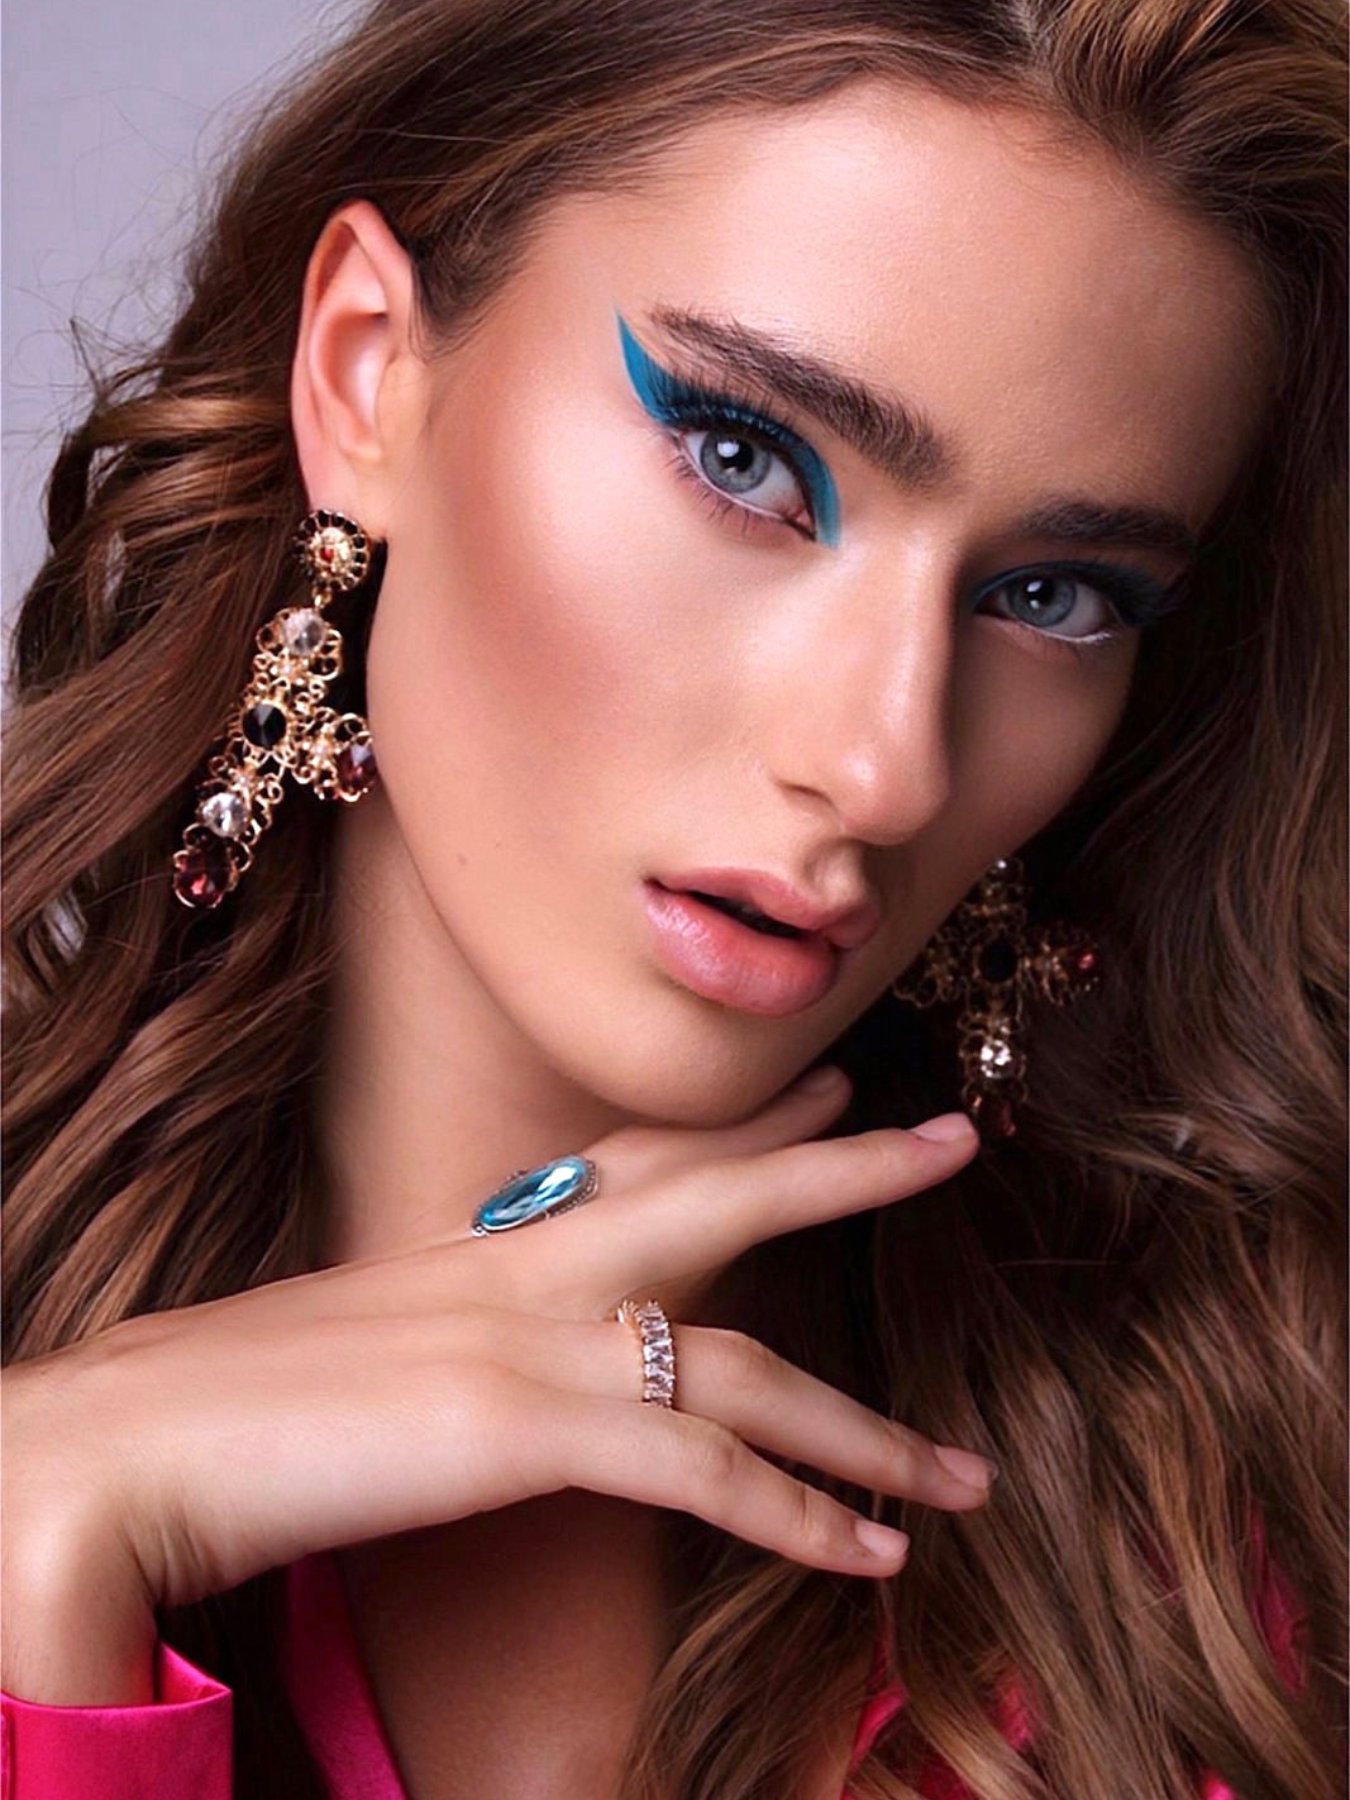 Fashion makeup. Model - KITTY, Photo - Zavod Studio, Makeup & Hair - Alona Dmytrenko